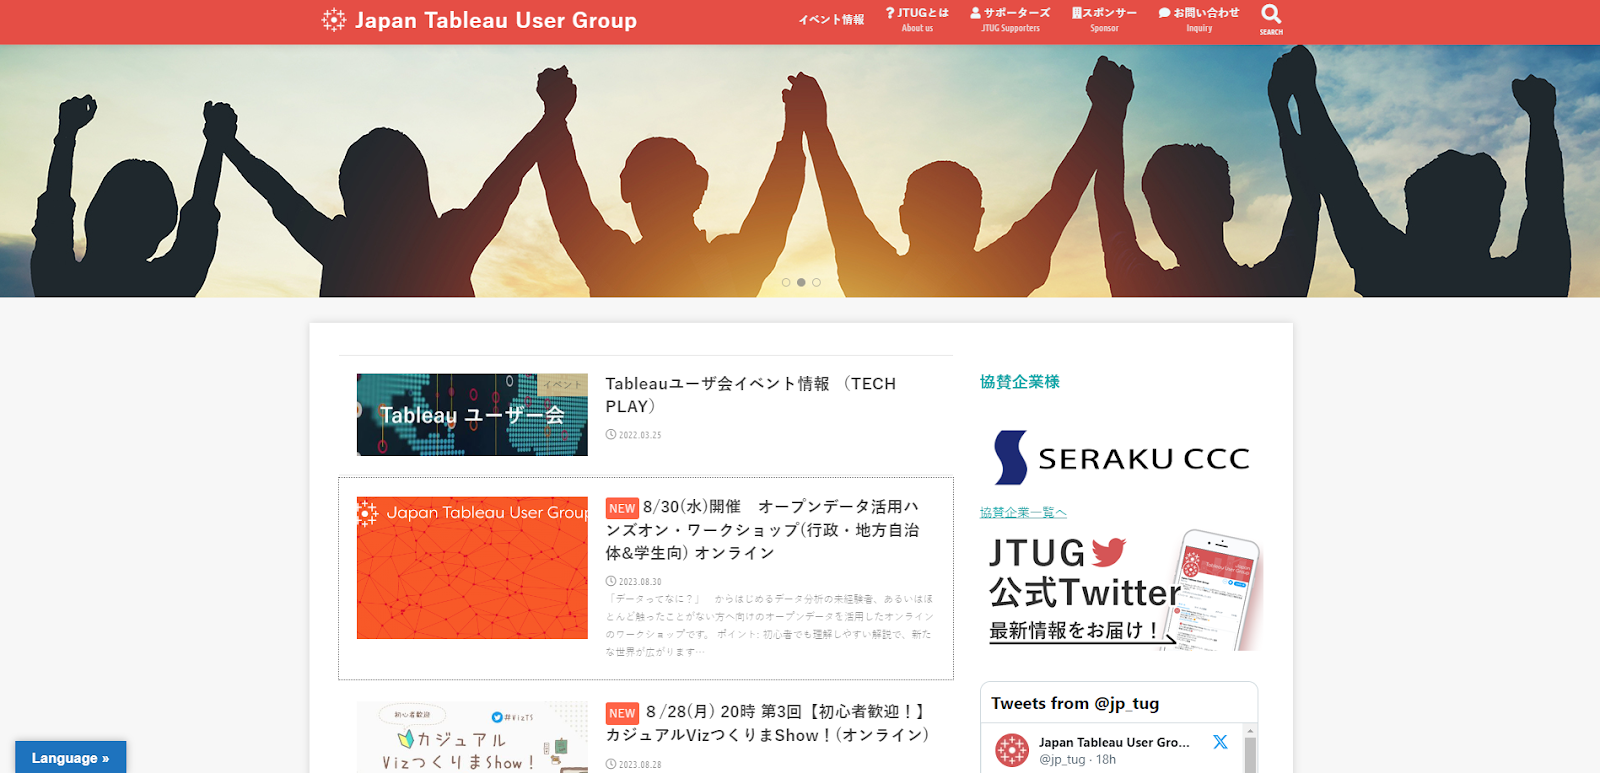 Japan Tableau User GroupがTableau未経験者向けのワークショップを開催